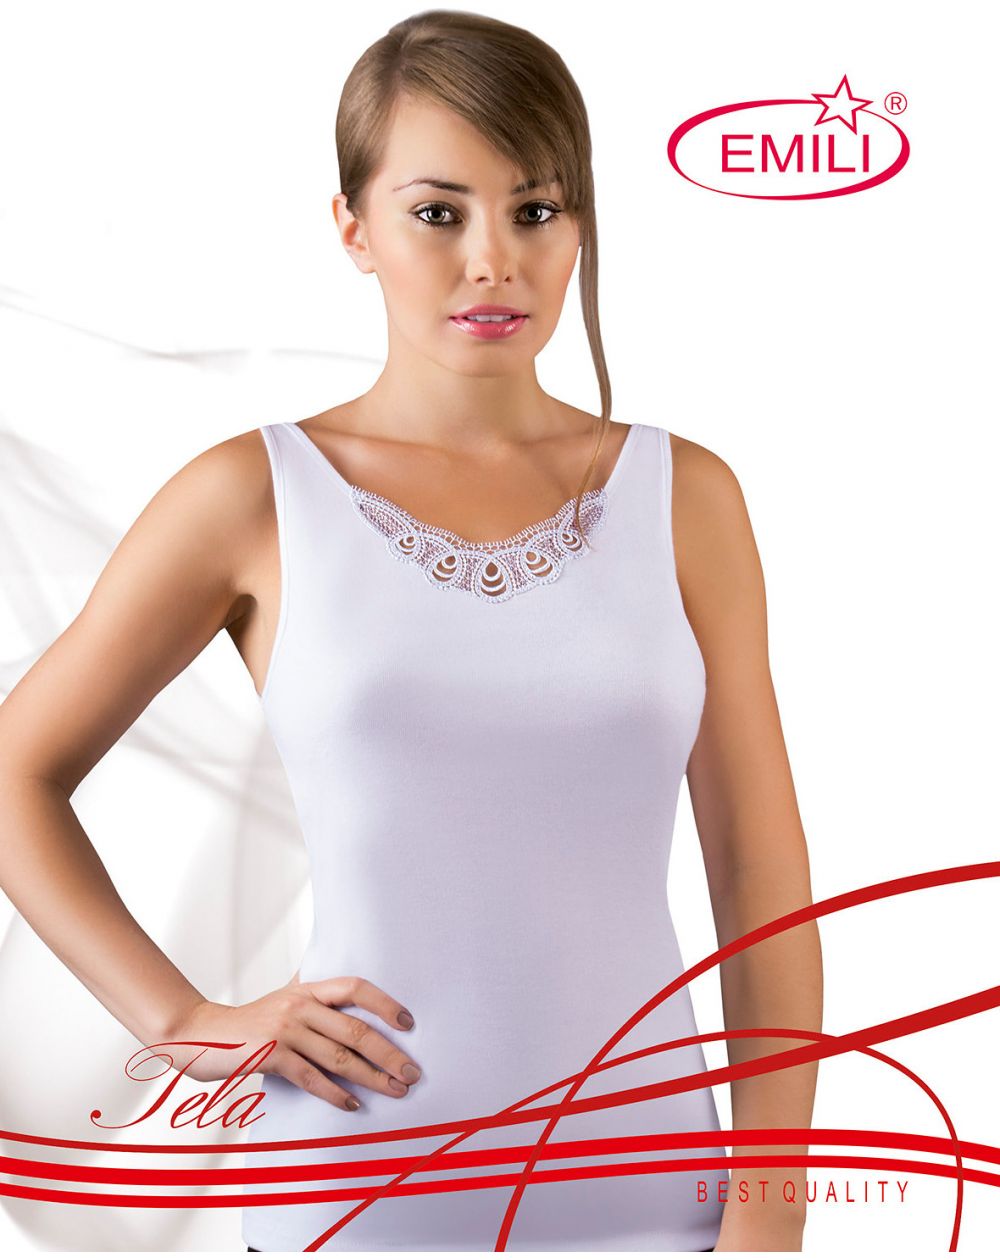 Camiseta de Emili Tela blanca 2XL-3XL